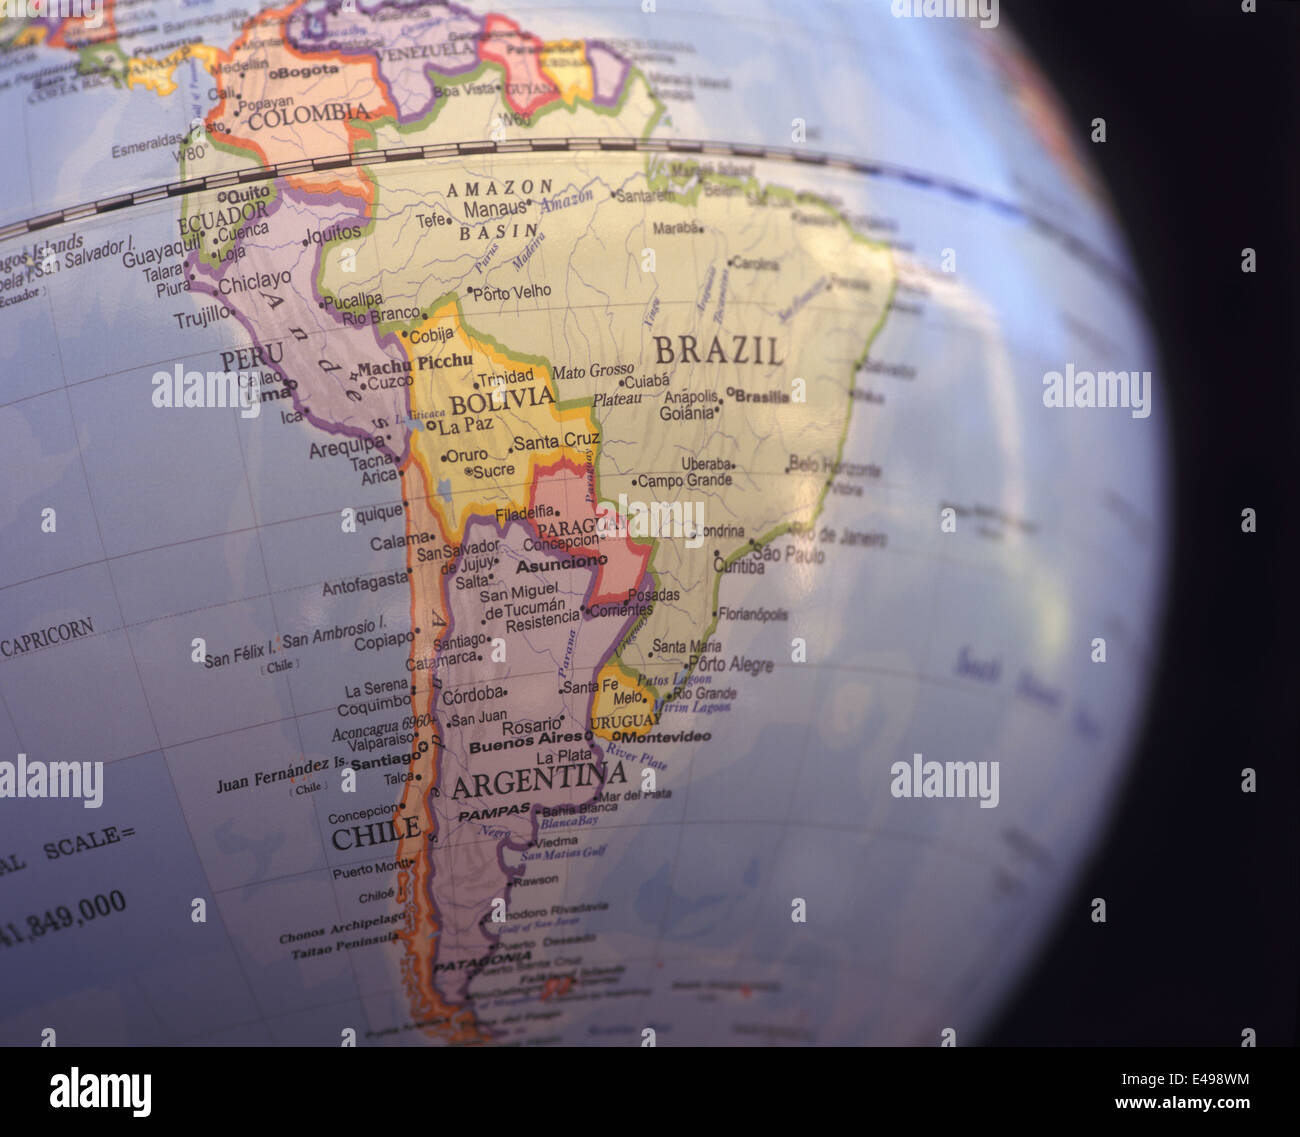 Globus erde brasilien karte -Fotos und -Bildmaterial in hoher Auflösung –  Alamy